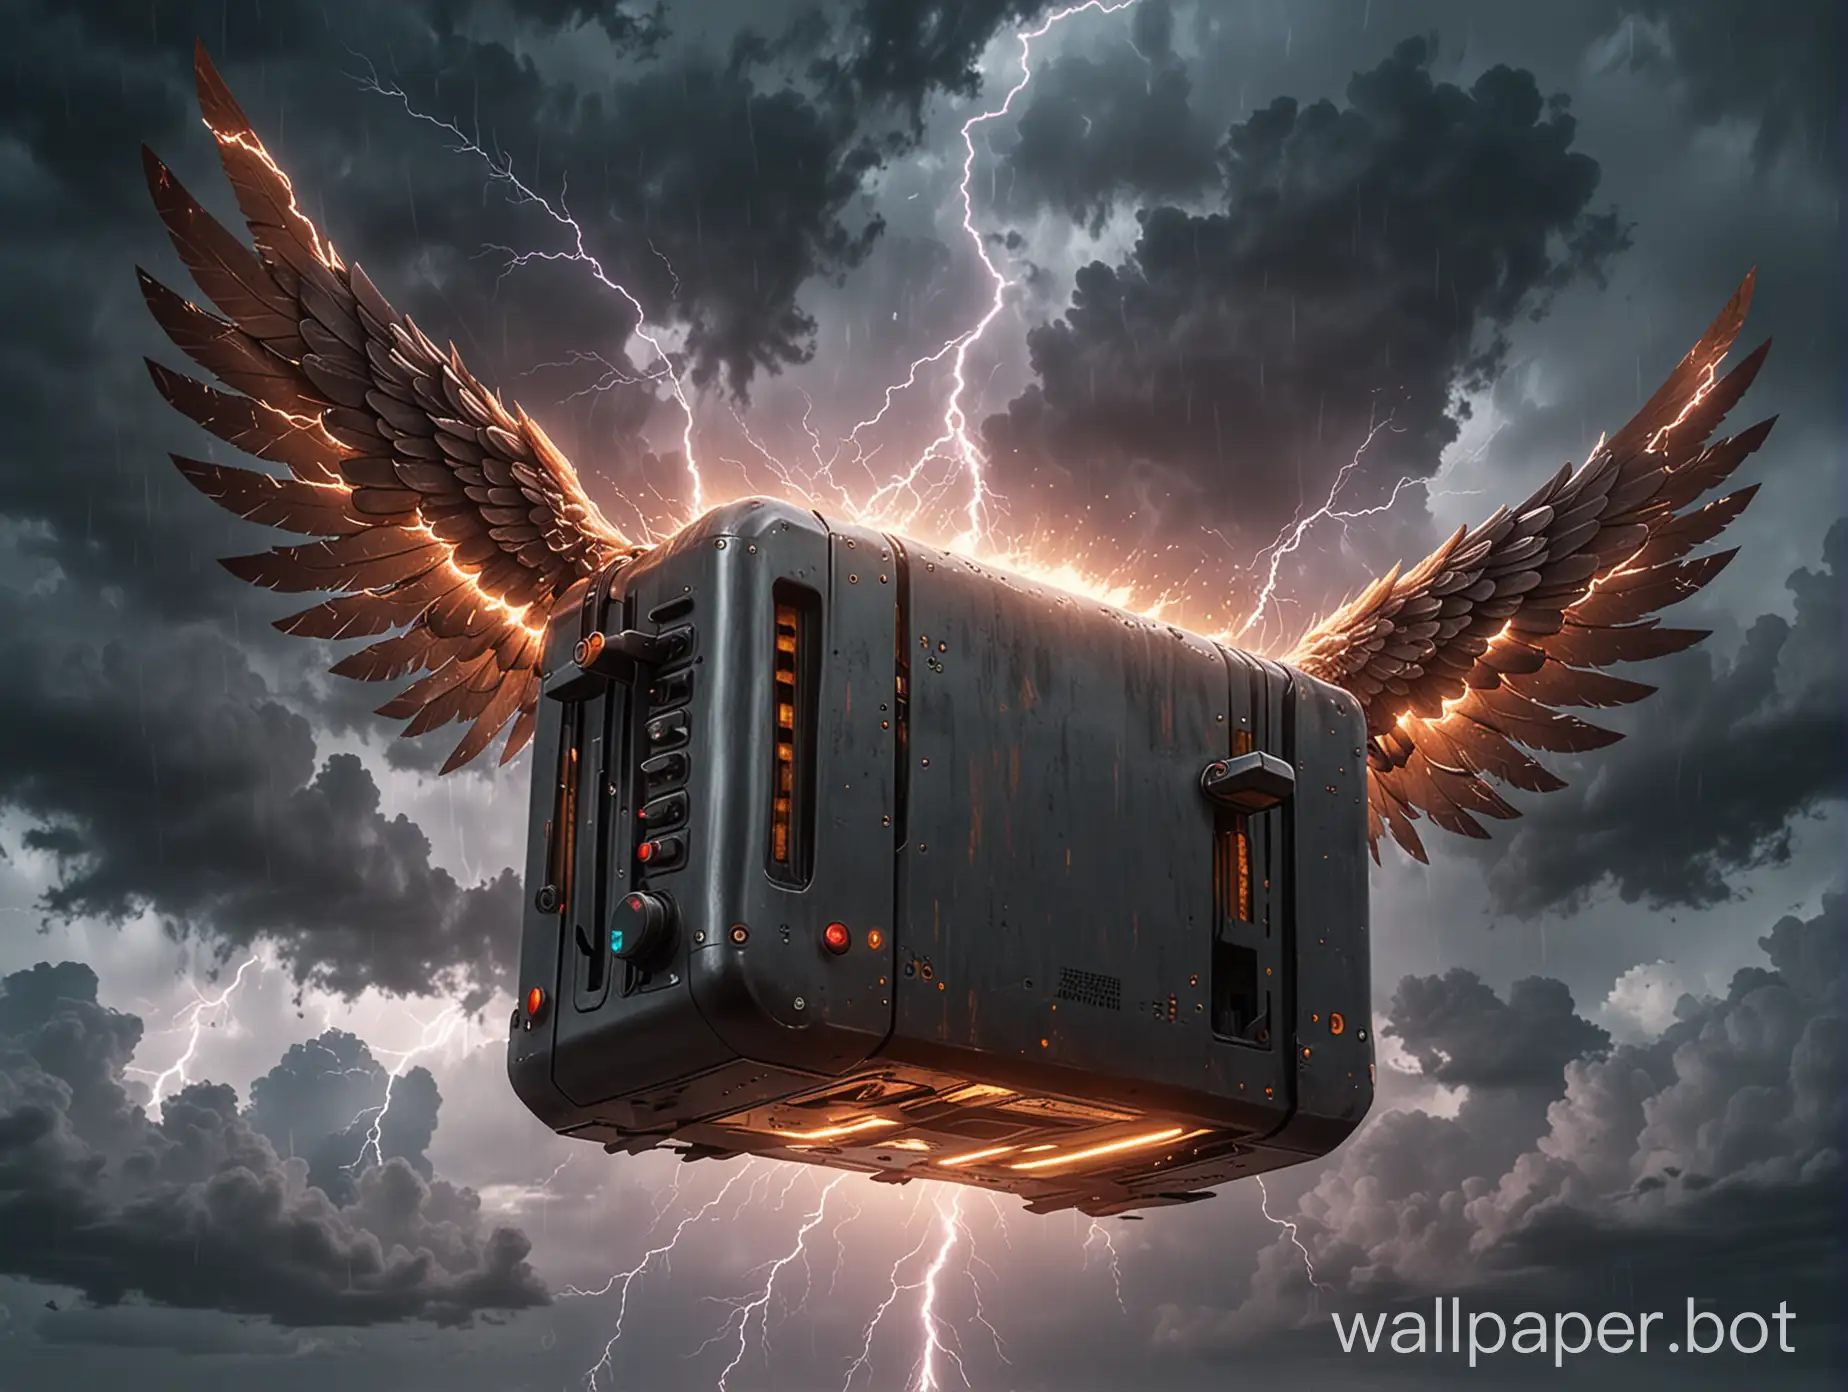 Flying-Cyberpunk-Toaster-Struck-by-Lightning-in-Stormy-Sky